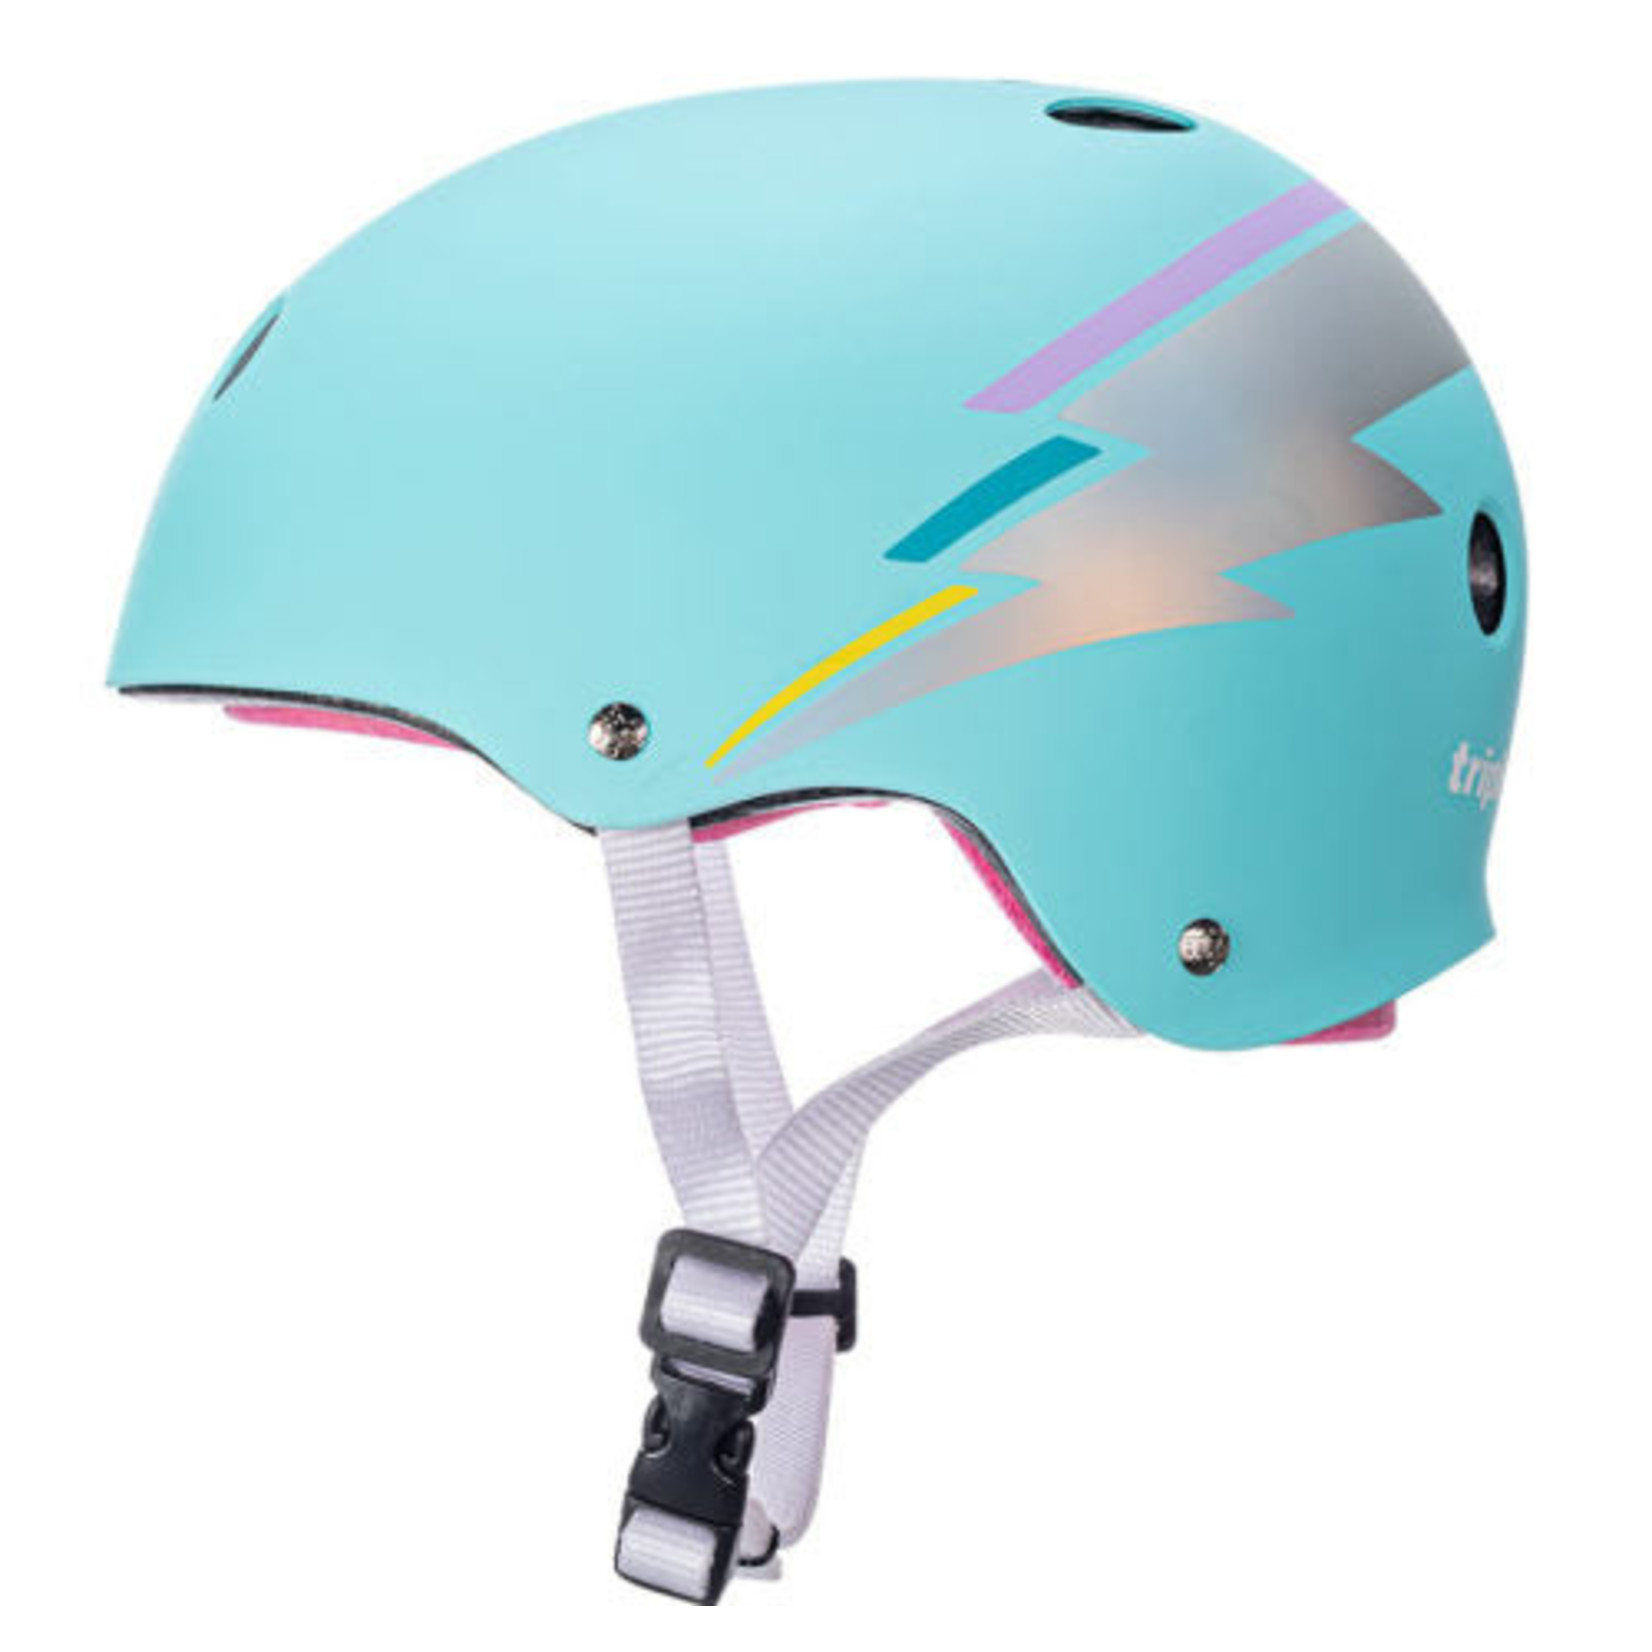 Triple 8 Cert Sweatsaver Helmet - Teal Hologram - XS/S